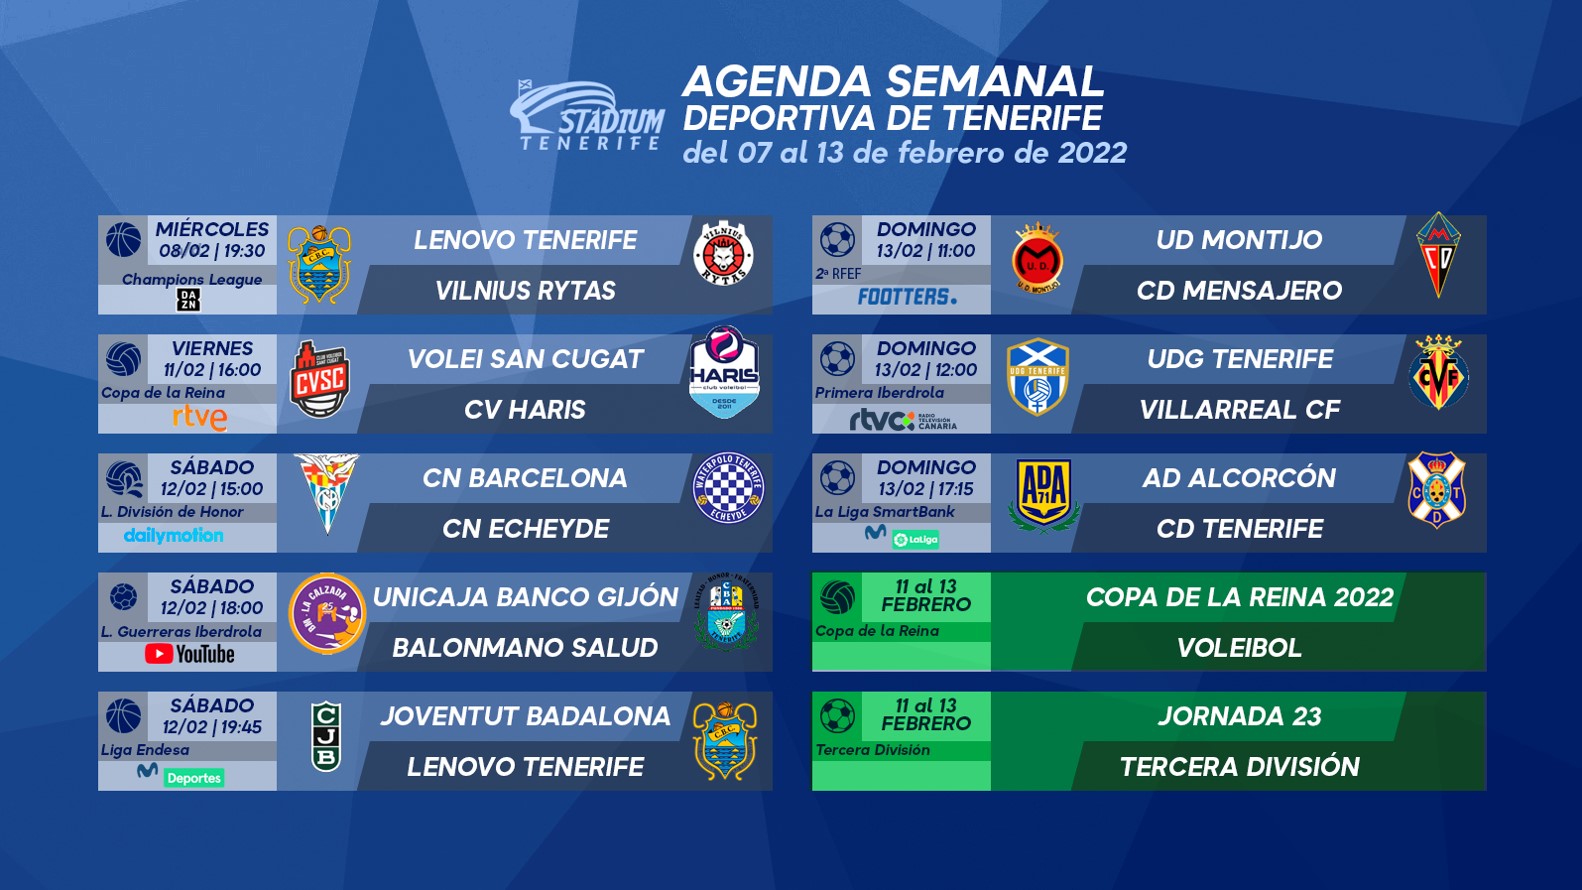 Agenda Semanal Deportiva de Tenerife (7 al 13 de febrero)